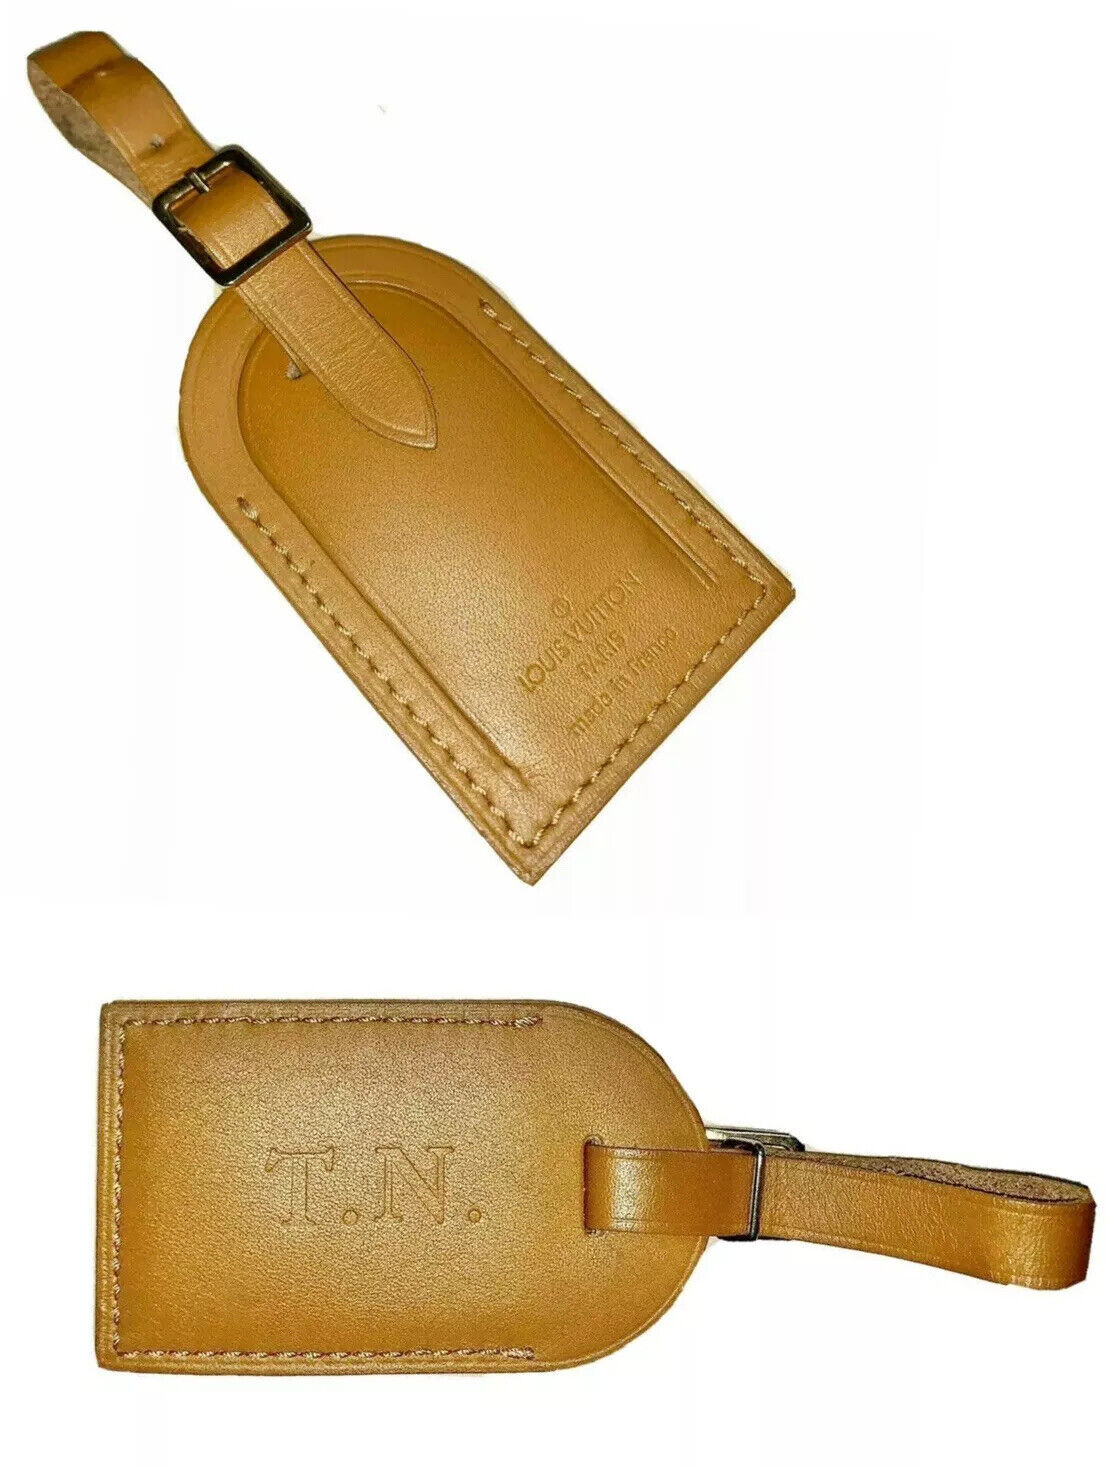 Louis Vuitton Name Tag Burnt Orange Calf Leather w/ TN Initials